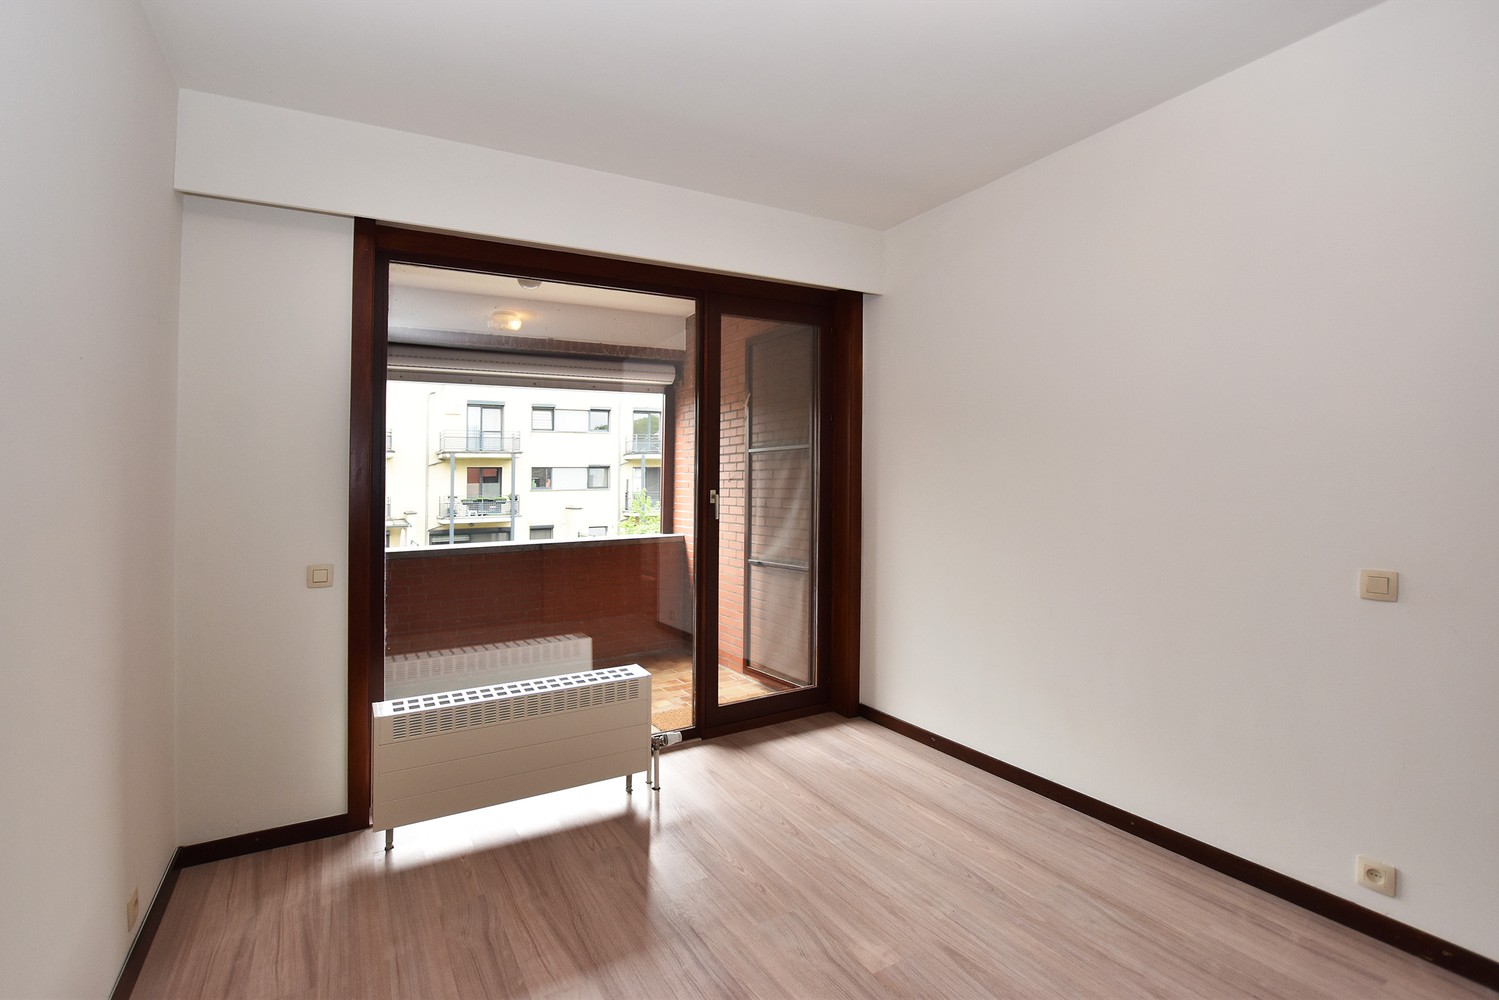 Ruim appartement met 2 slaapkamers & garagebox in Wommelgem! afbeelding 9